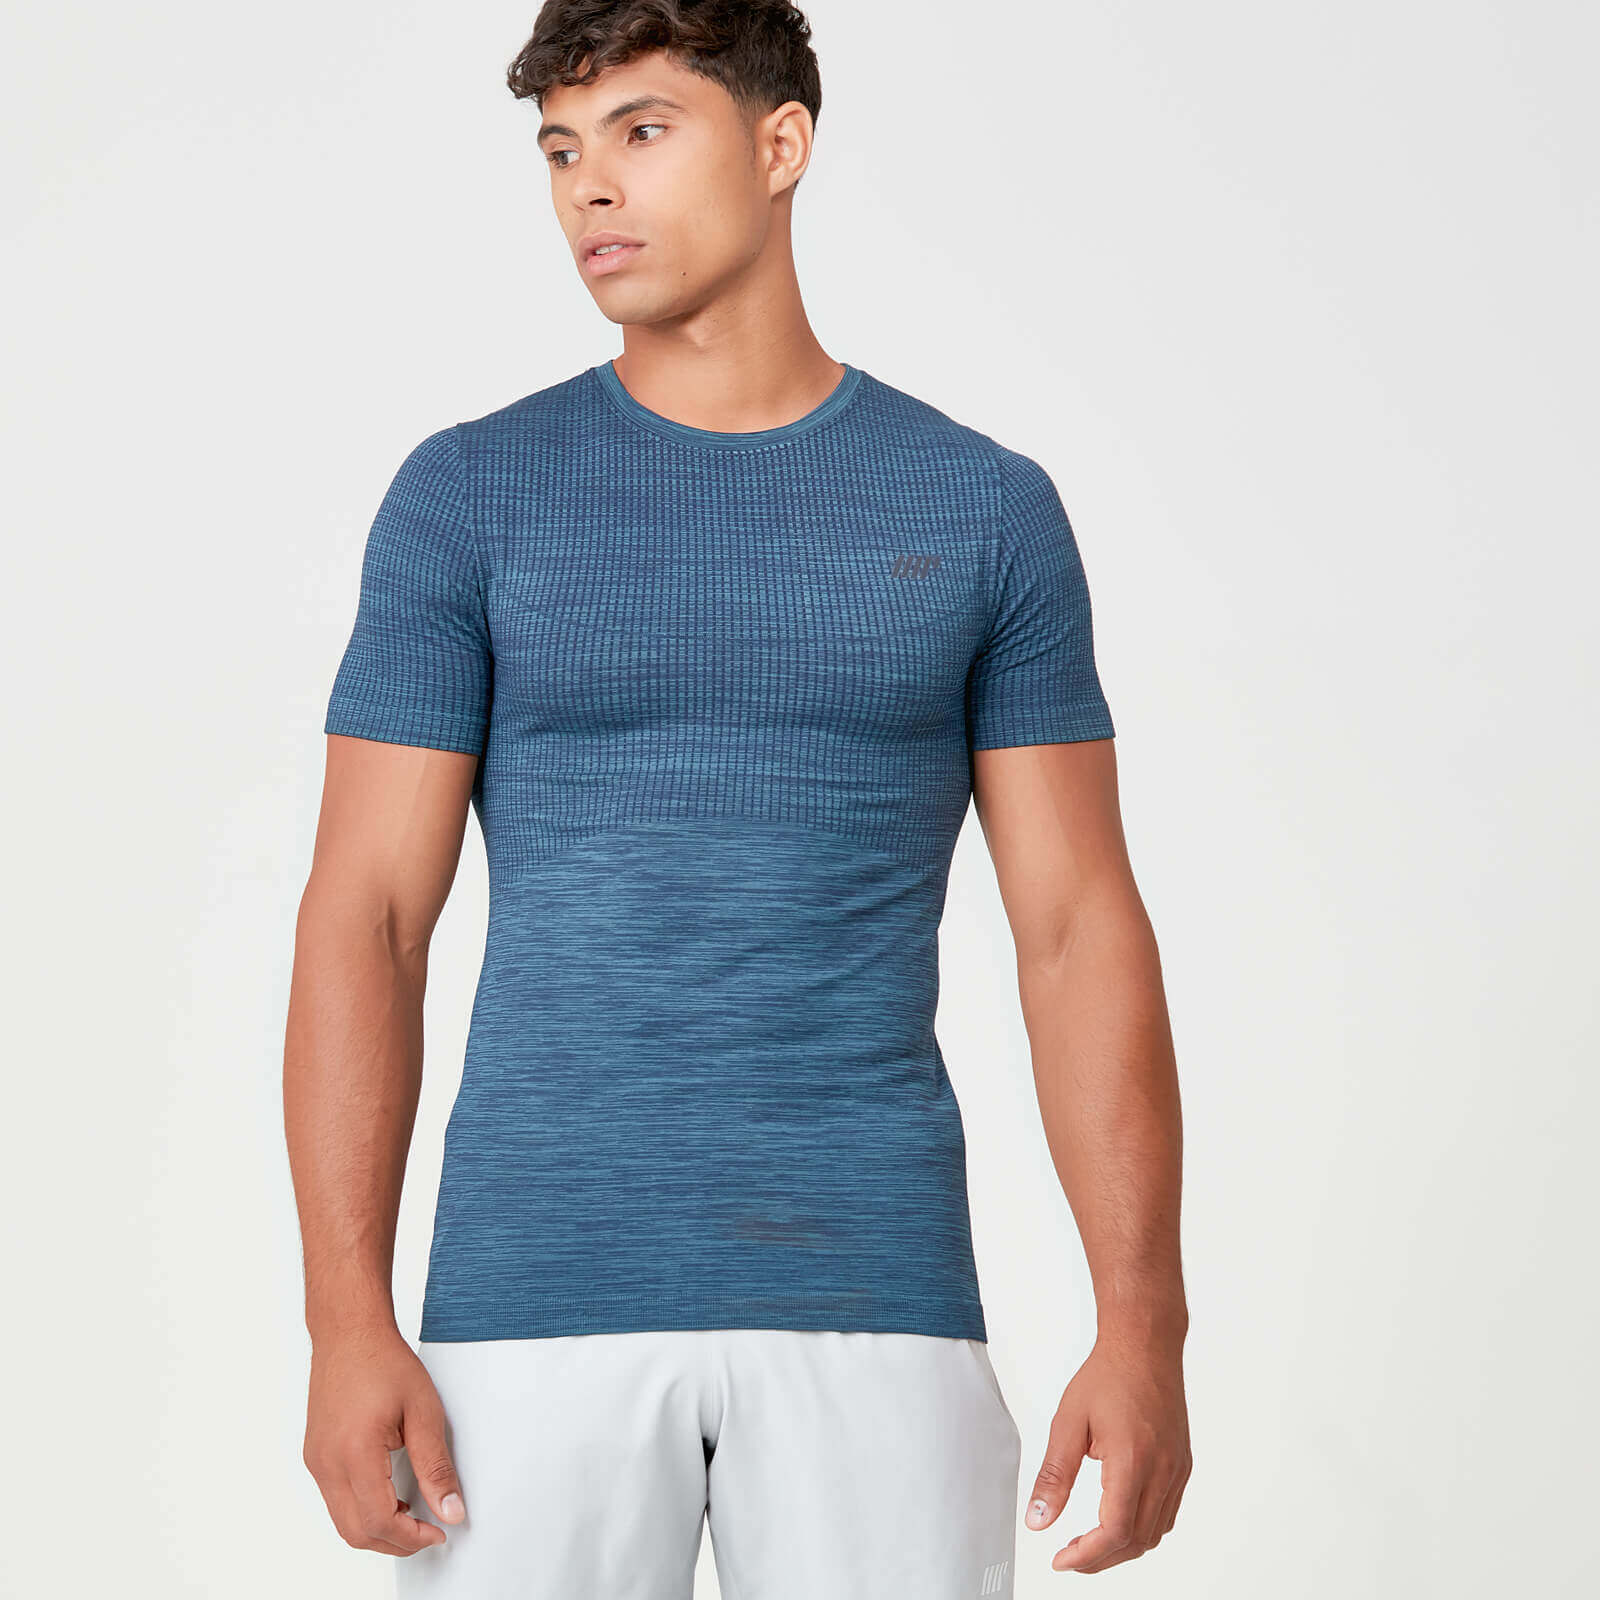 Buy Men's Seamless Gym T-Shirt, Blue